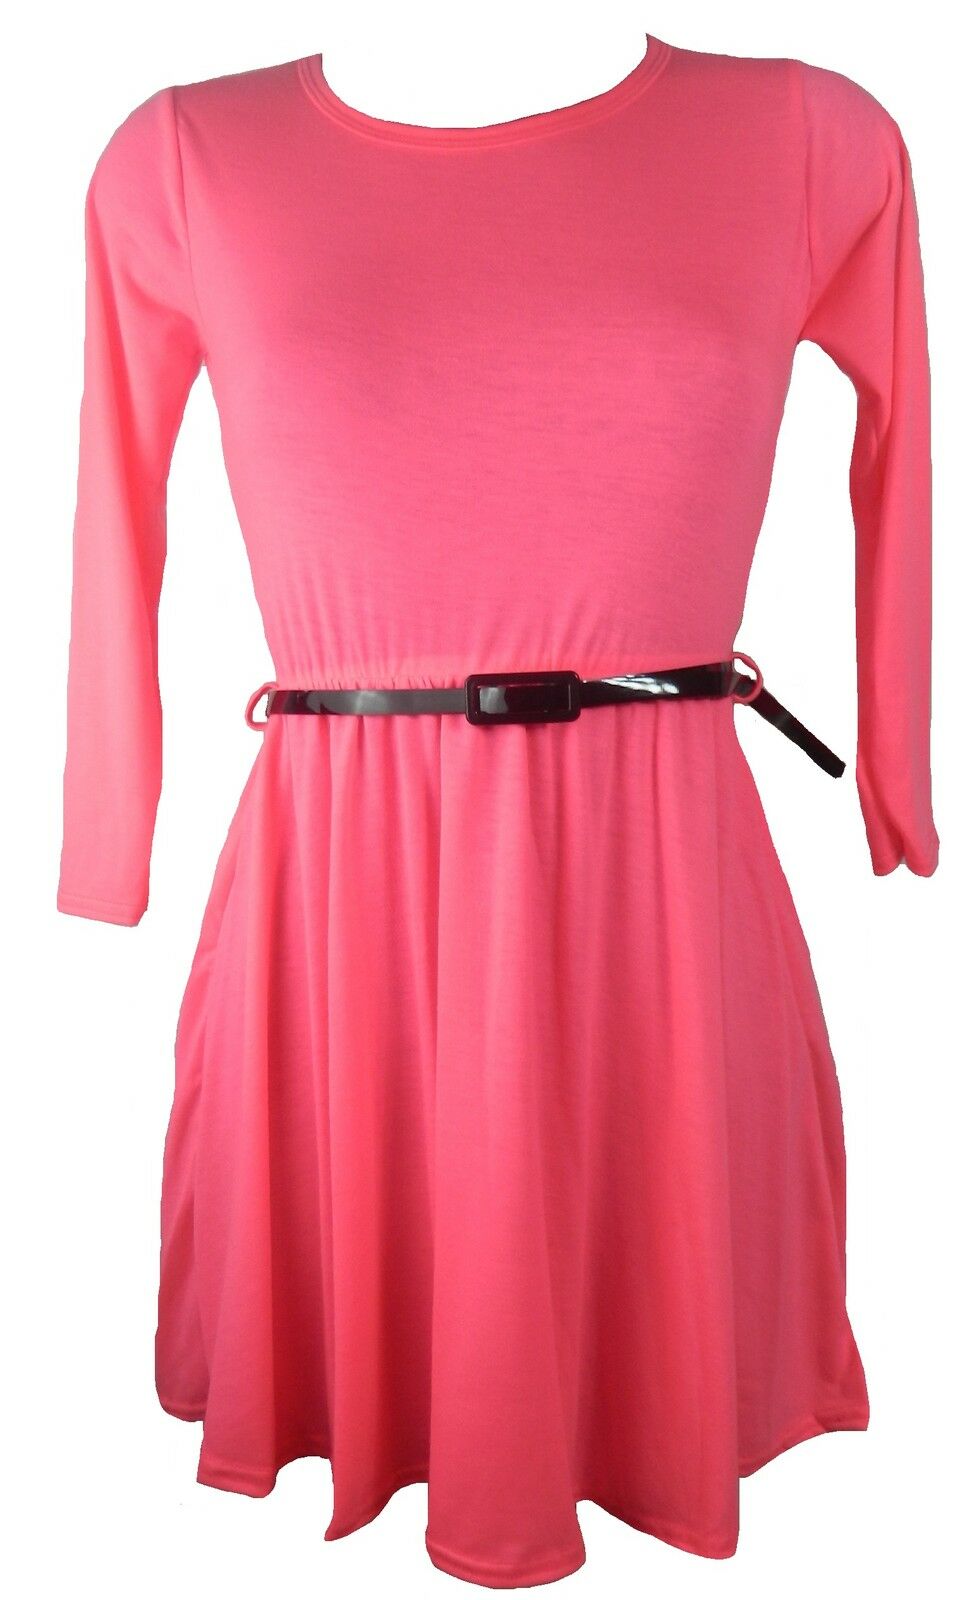 Girls Plain Neon Pink Skater Dress With Belt, Long Sleeve, Ages 7-8, 9-10, 11-12, 13